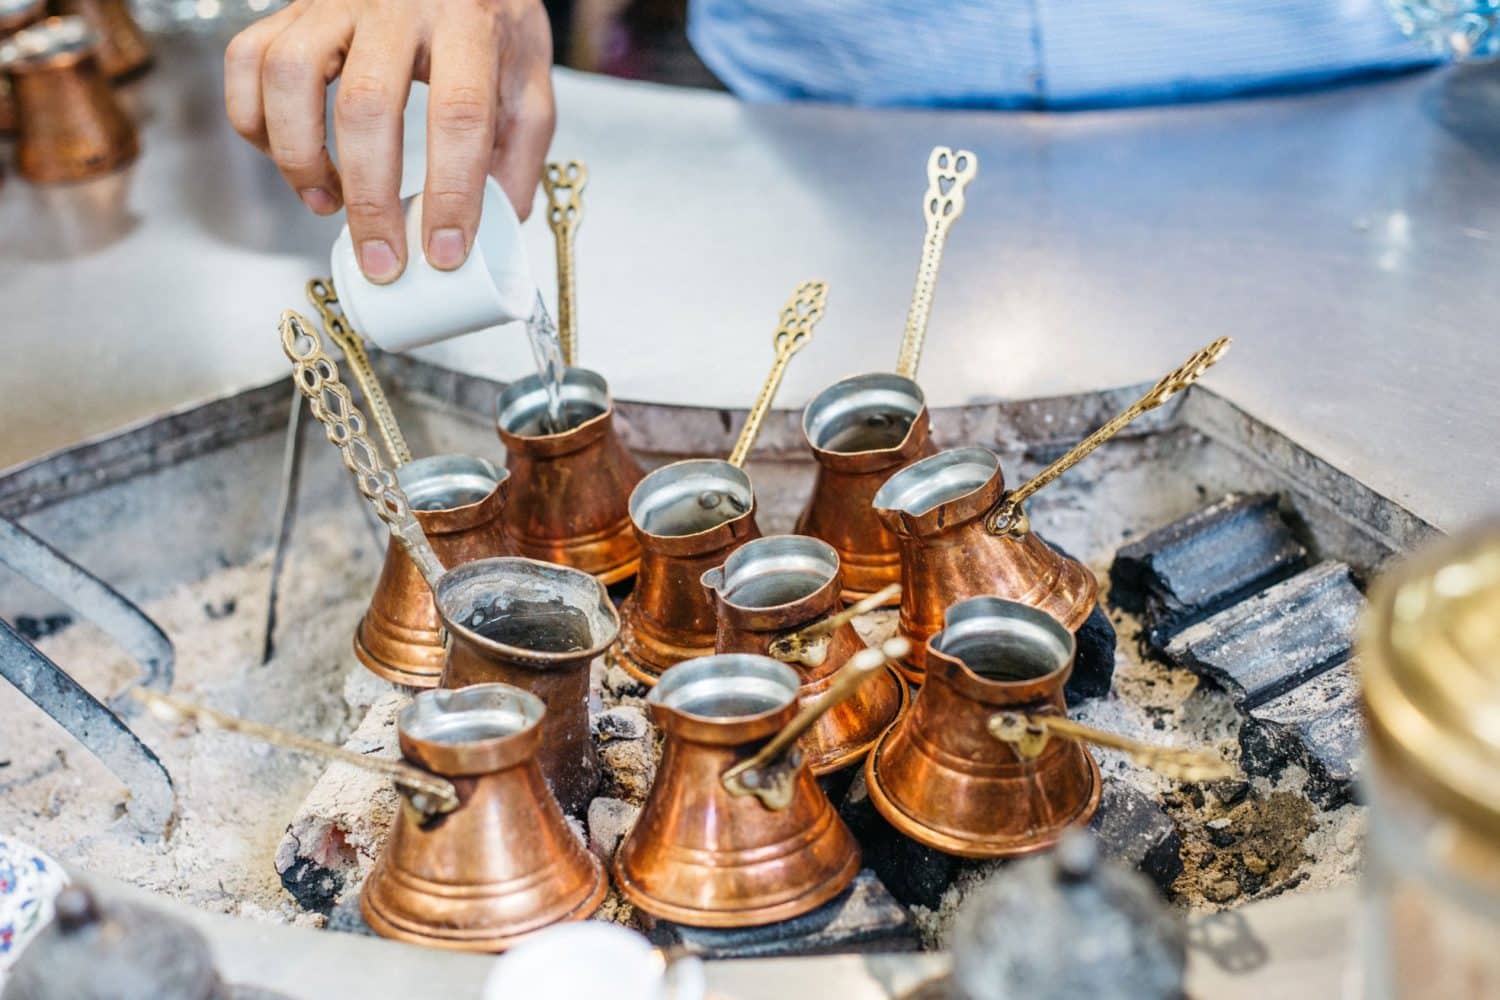 Tour Photos: Street vendor Turkish Coffee